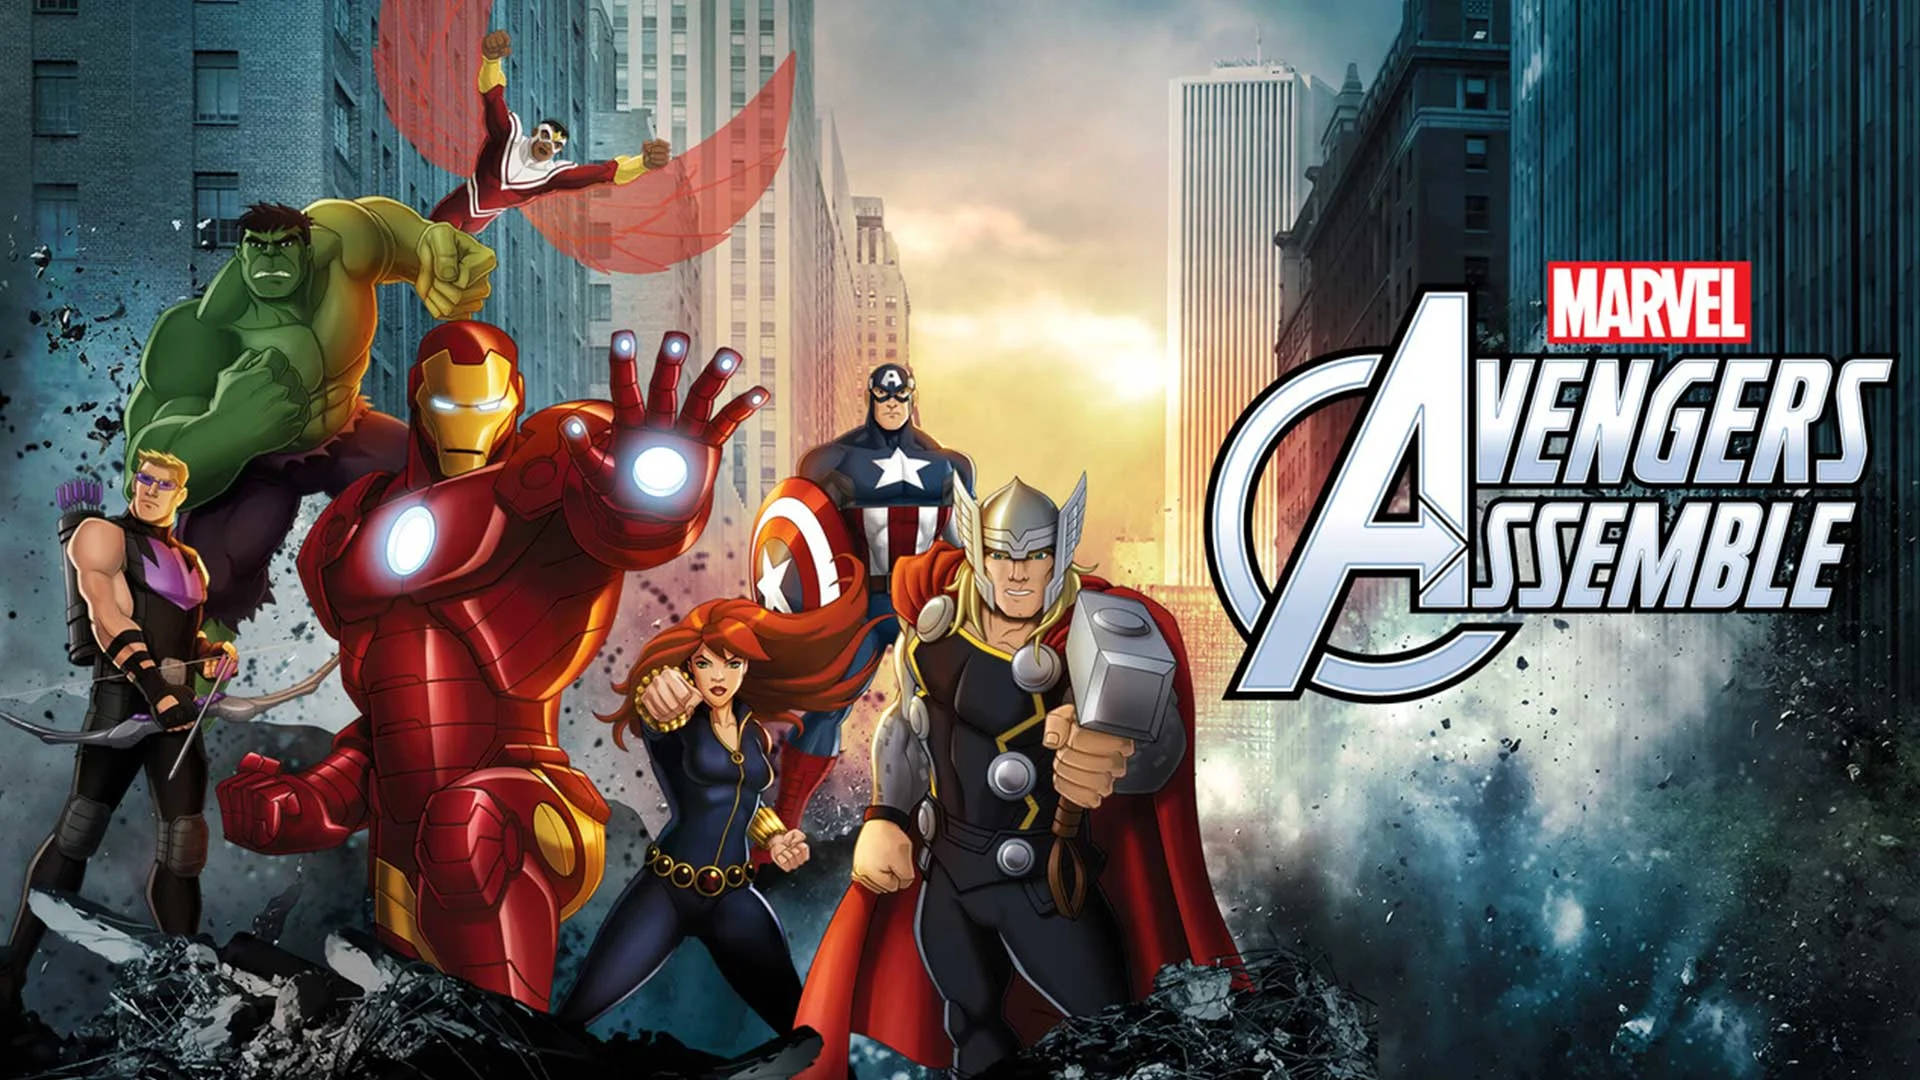 Avengersversammeln Sich - Digitale Illustration Wallpaper